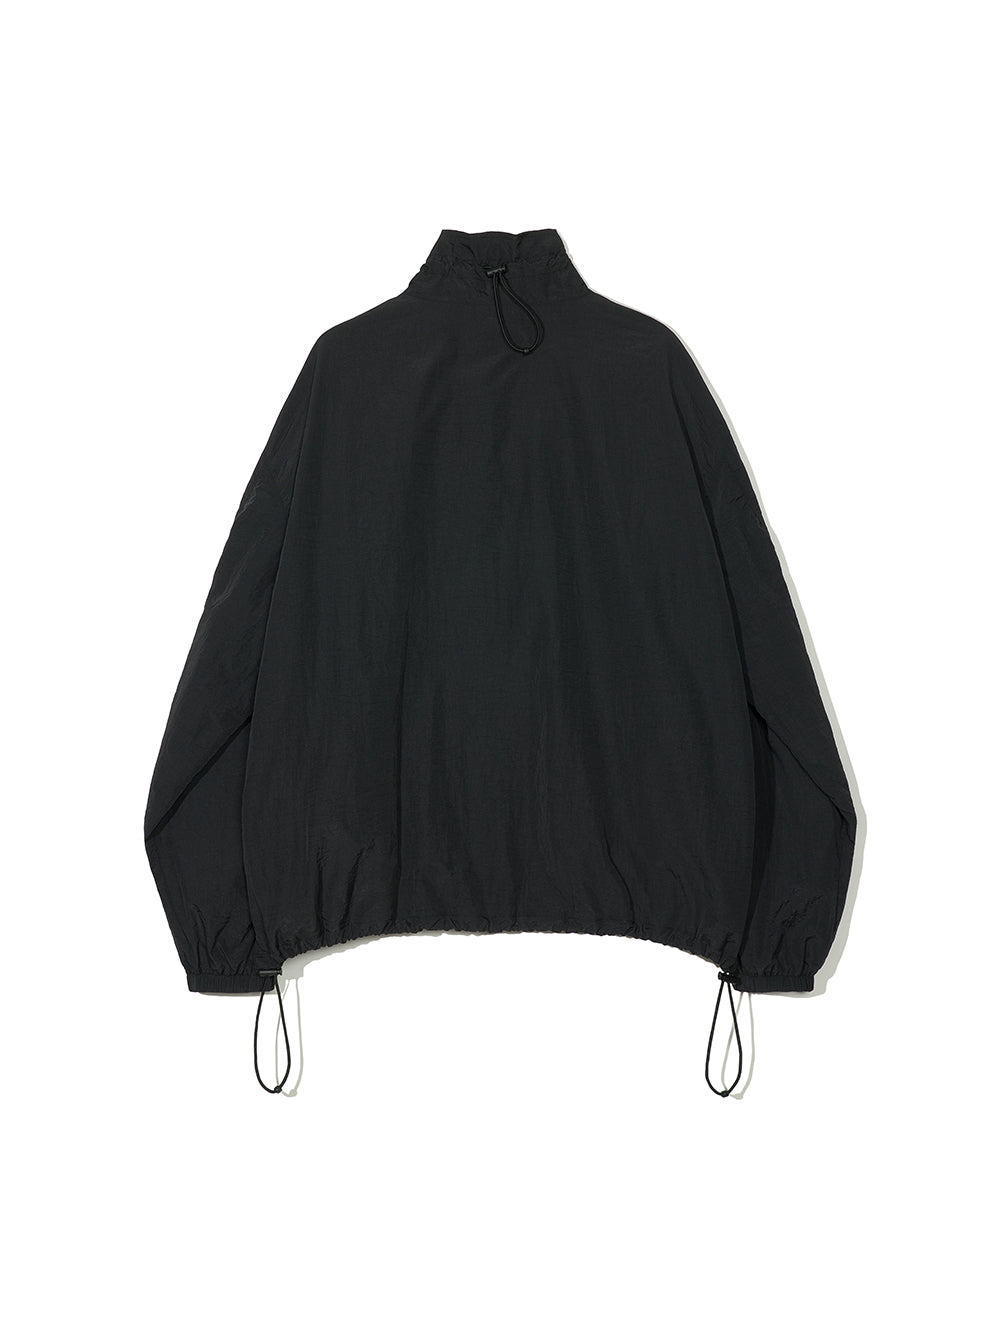 Curved Zipper Windbreaker Zip-up Jacket BLACK